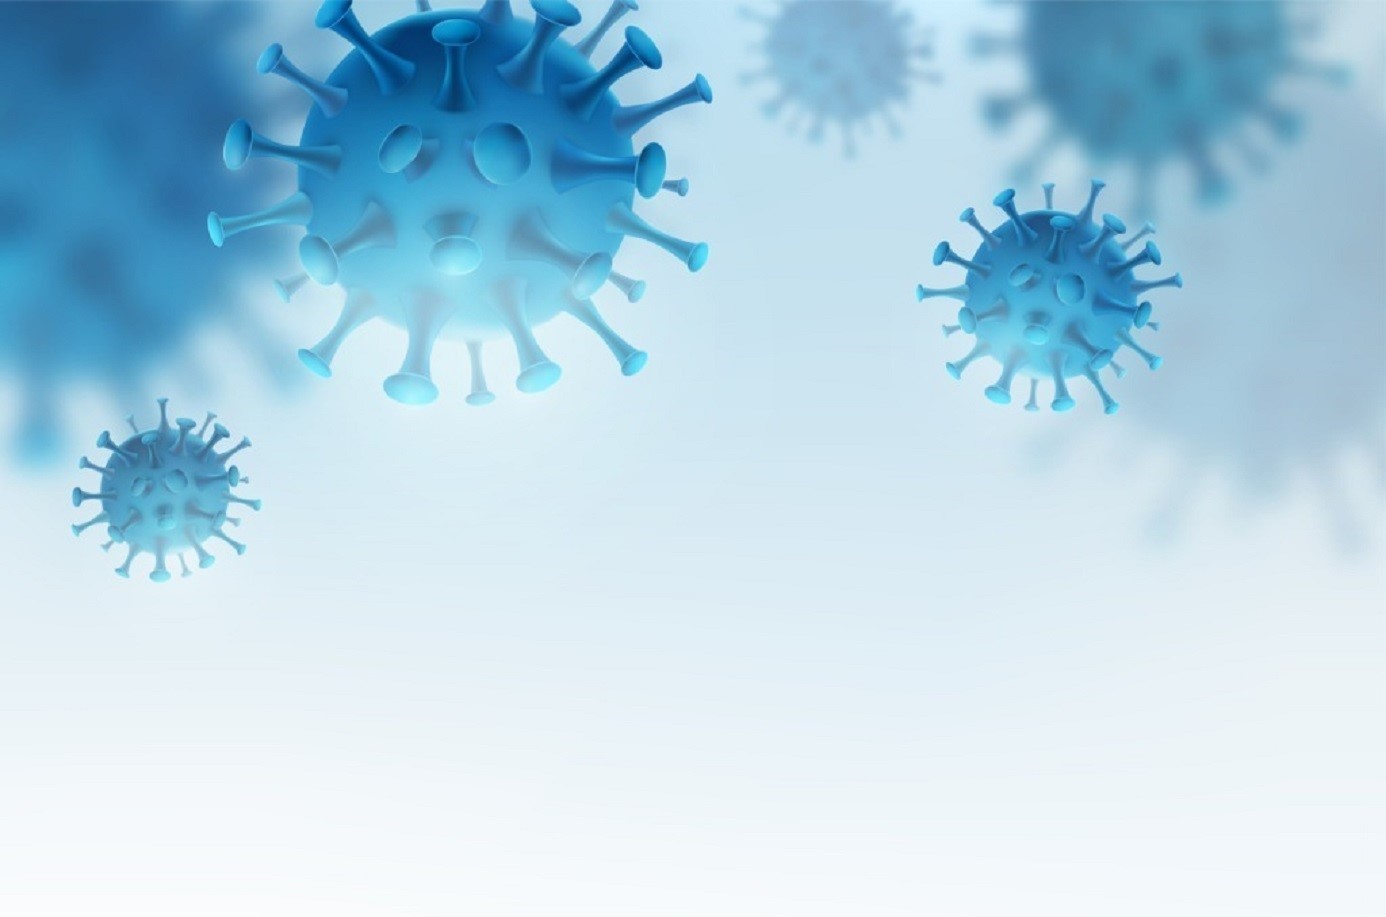 virus-bacteria-vector-background-cells-disease-outbreak-coronavirus-vector-id1211544068